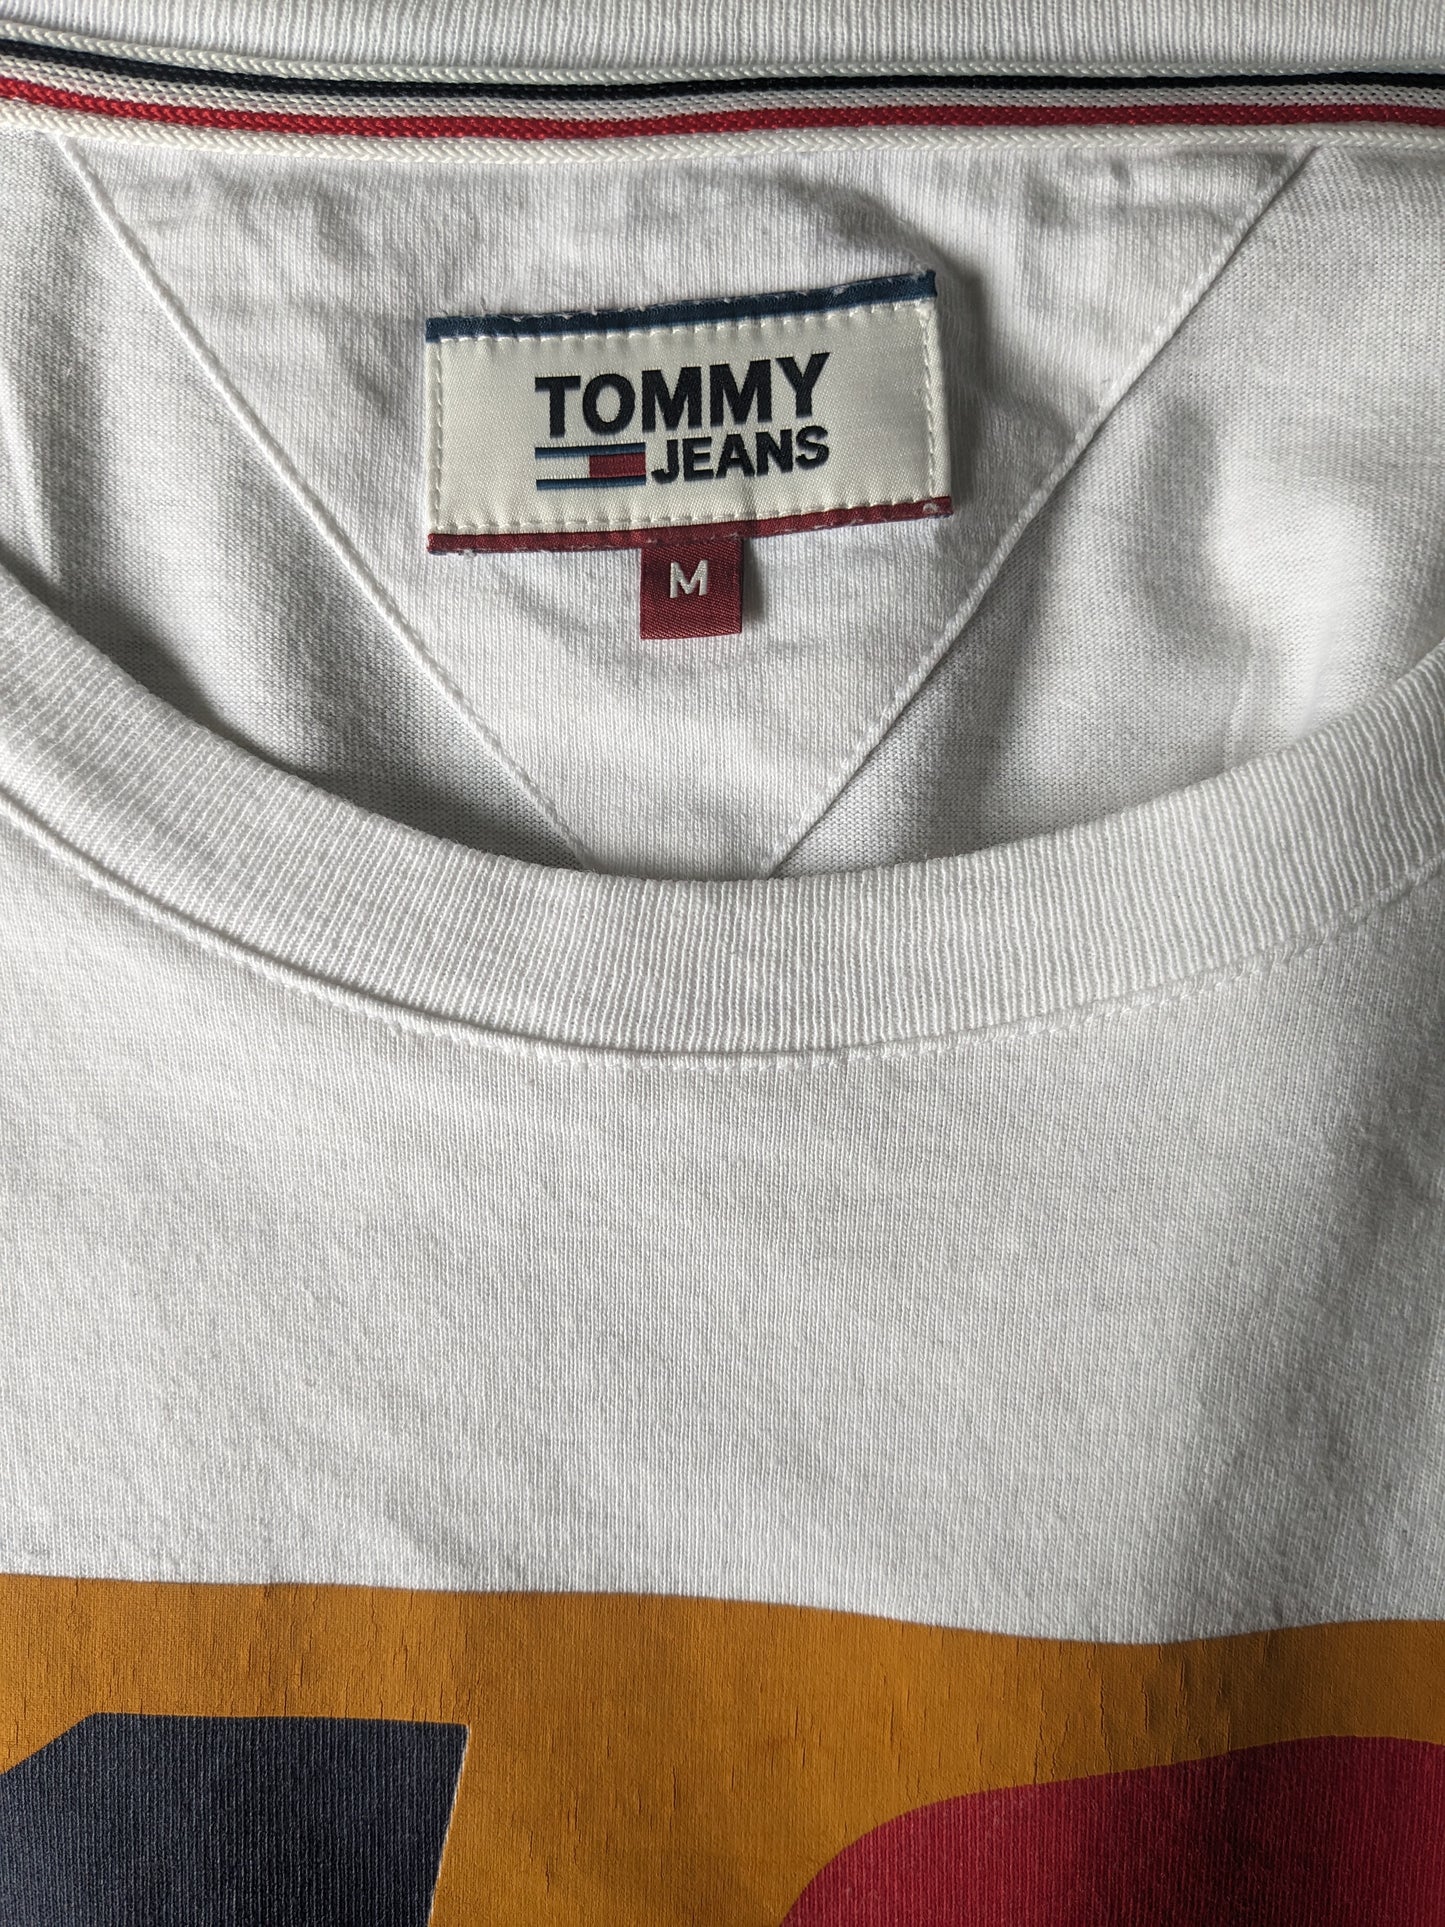 Tommy jeans longsleeve. Bianco con stampa. Taglia M.